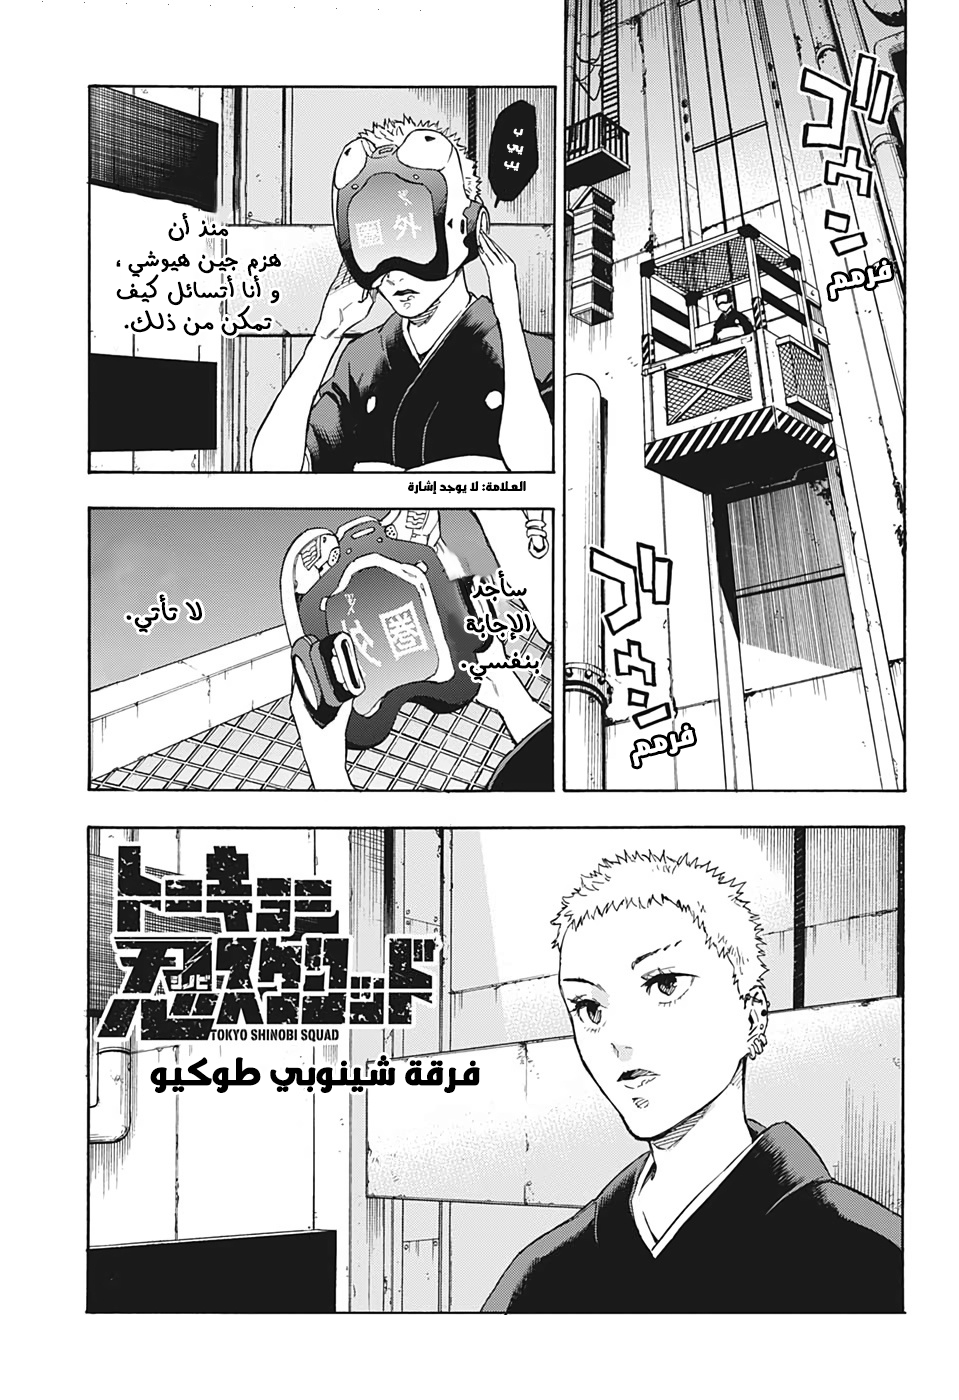 Tokyo Shinobi Squad: Chapter 26 - Page 1